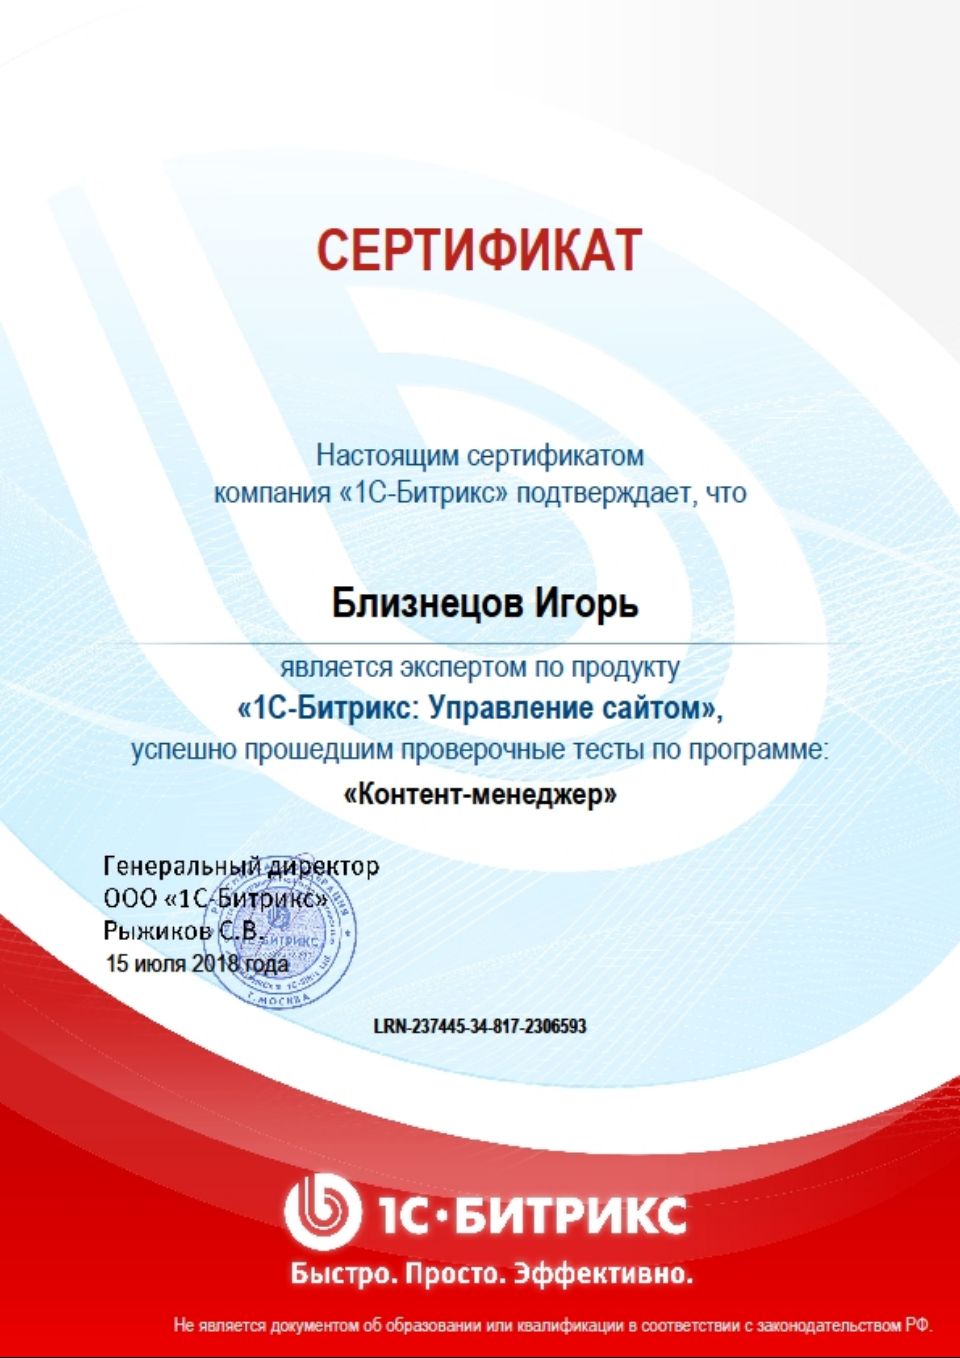 Сертификат Битрикс-Контент менеджер 